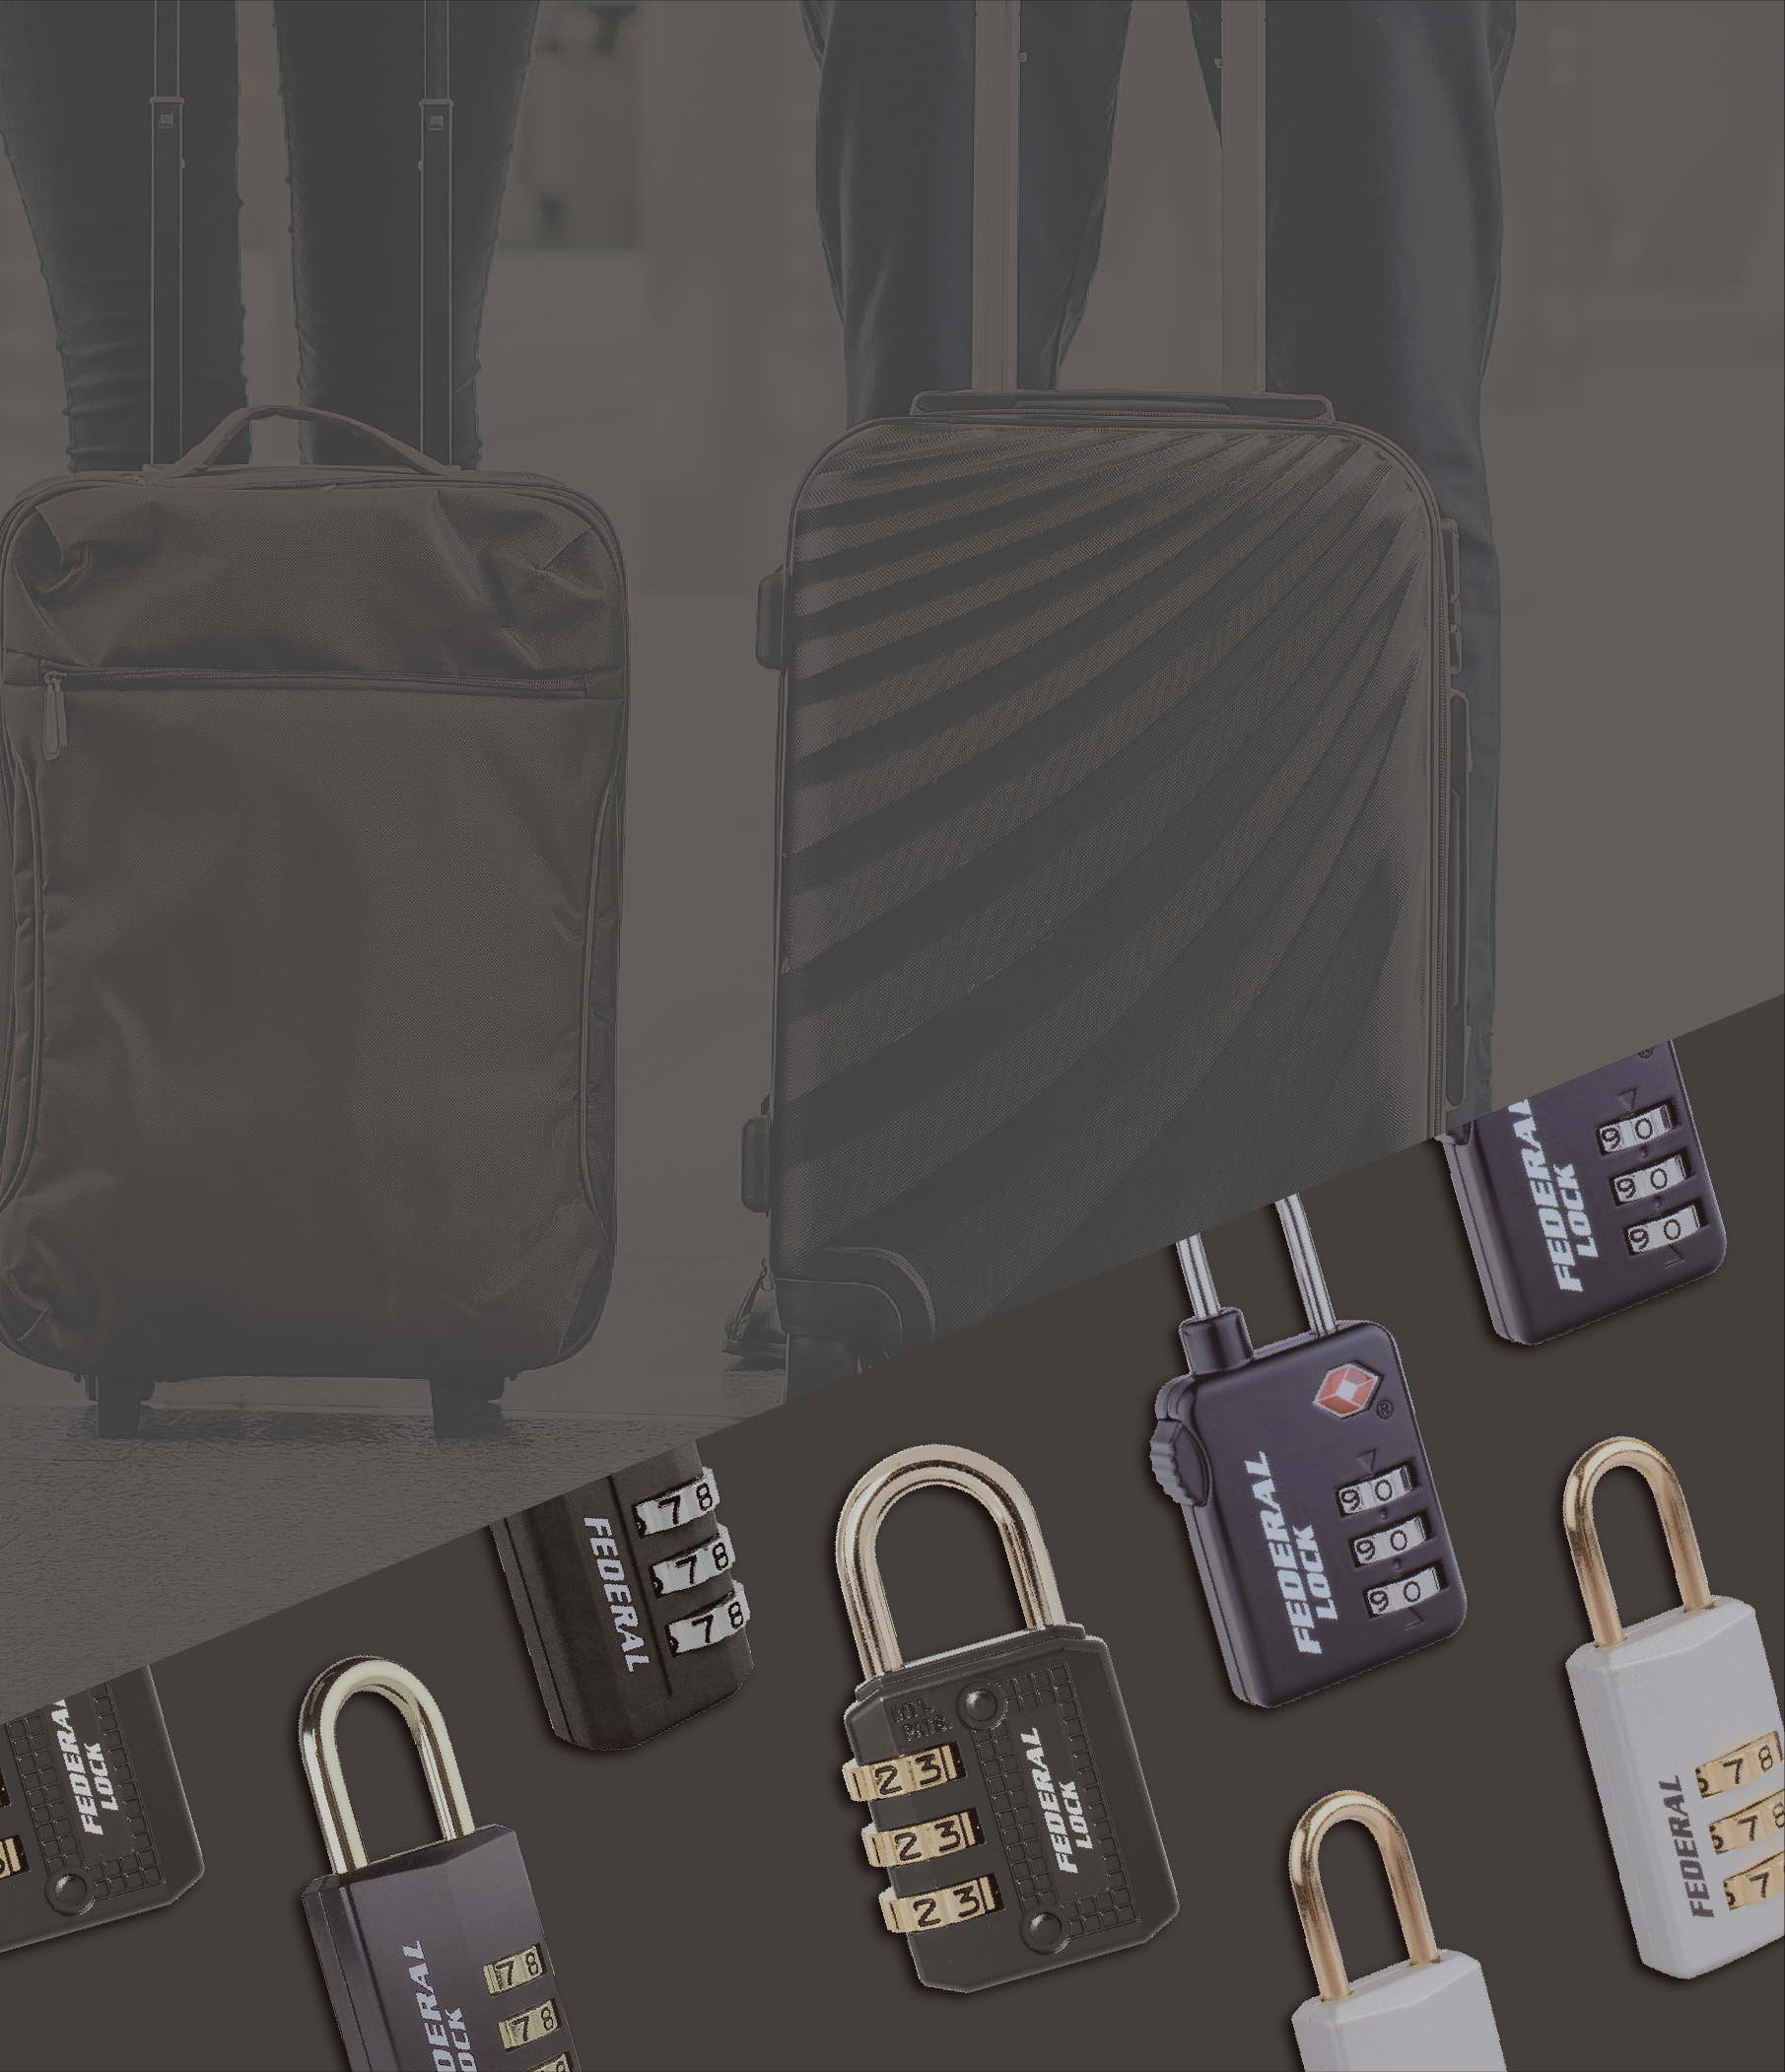 Luggage Combination Locks